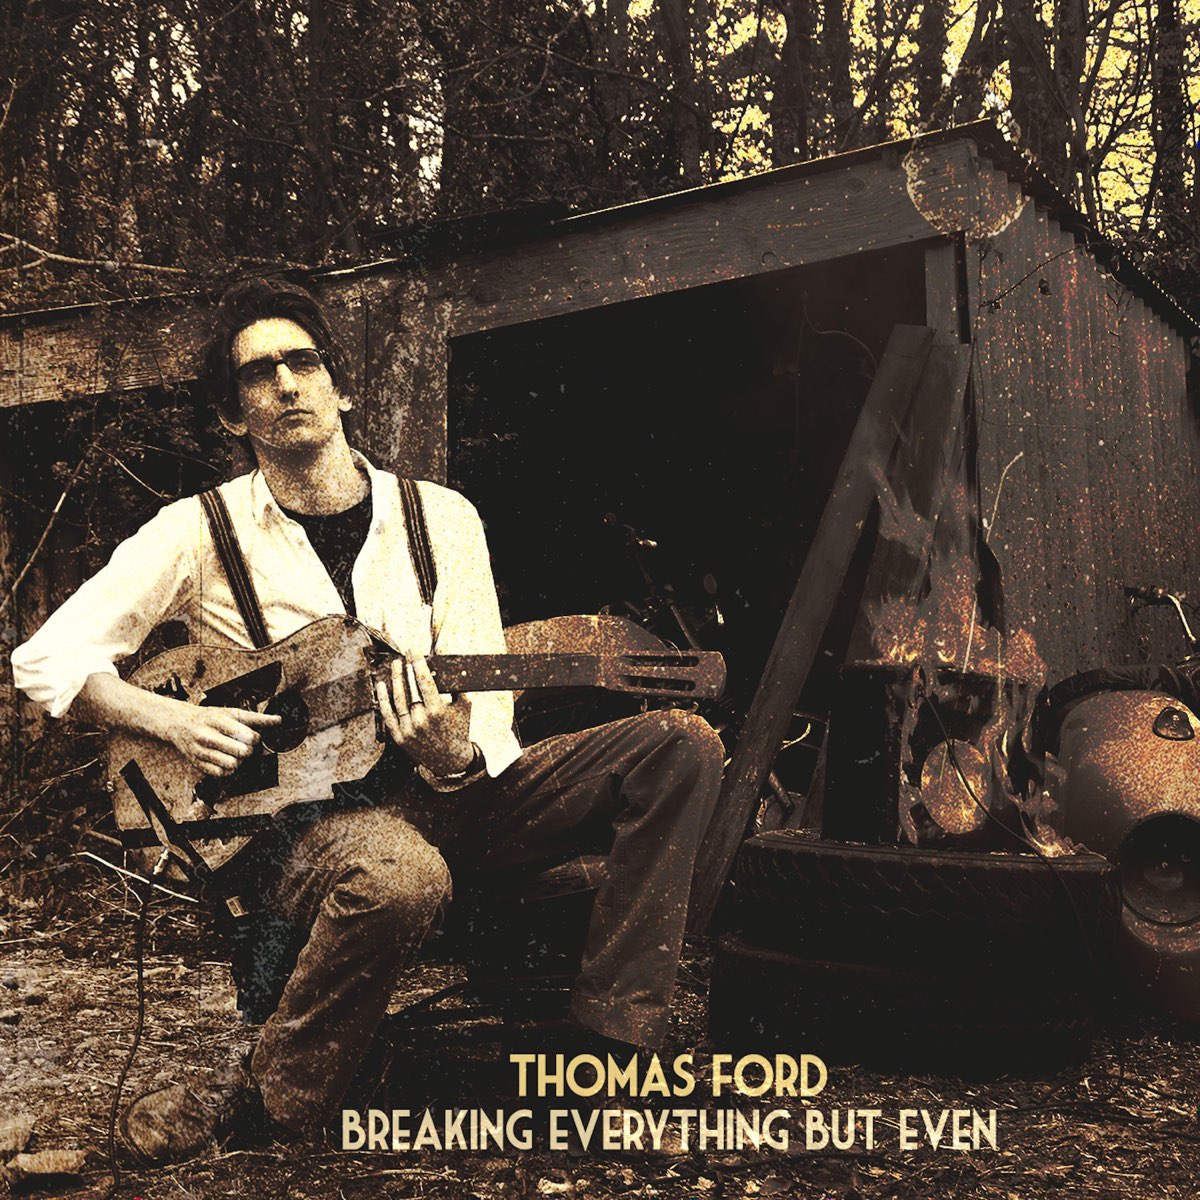 Thomas Ford poet. Thomas Ford Composer. Broken everything